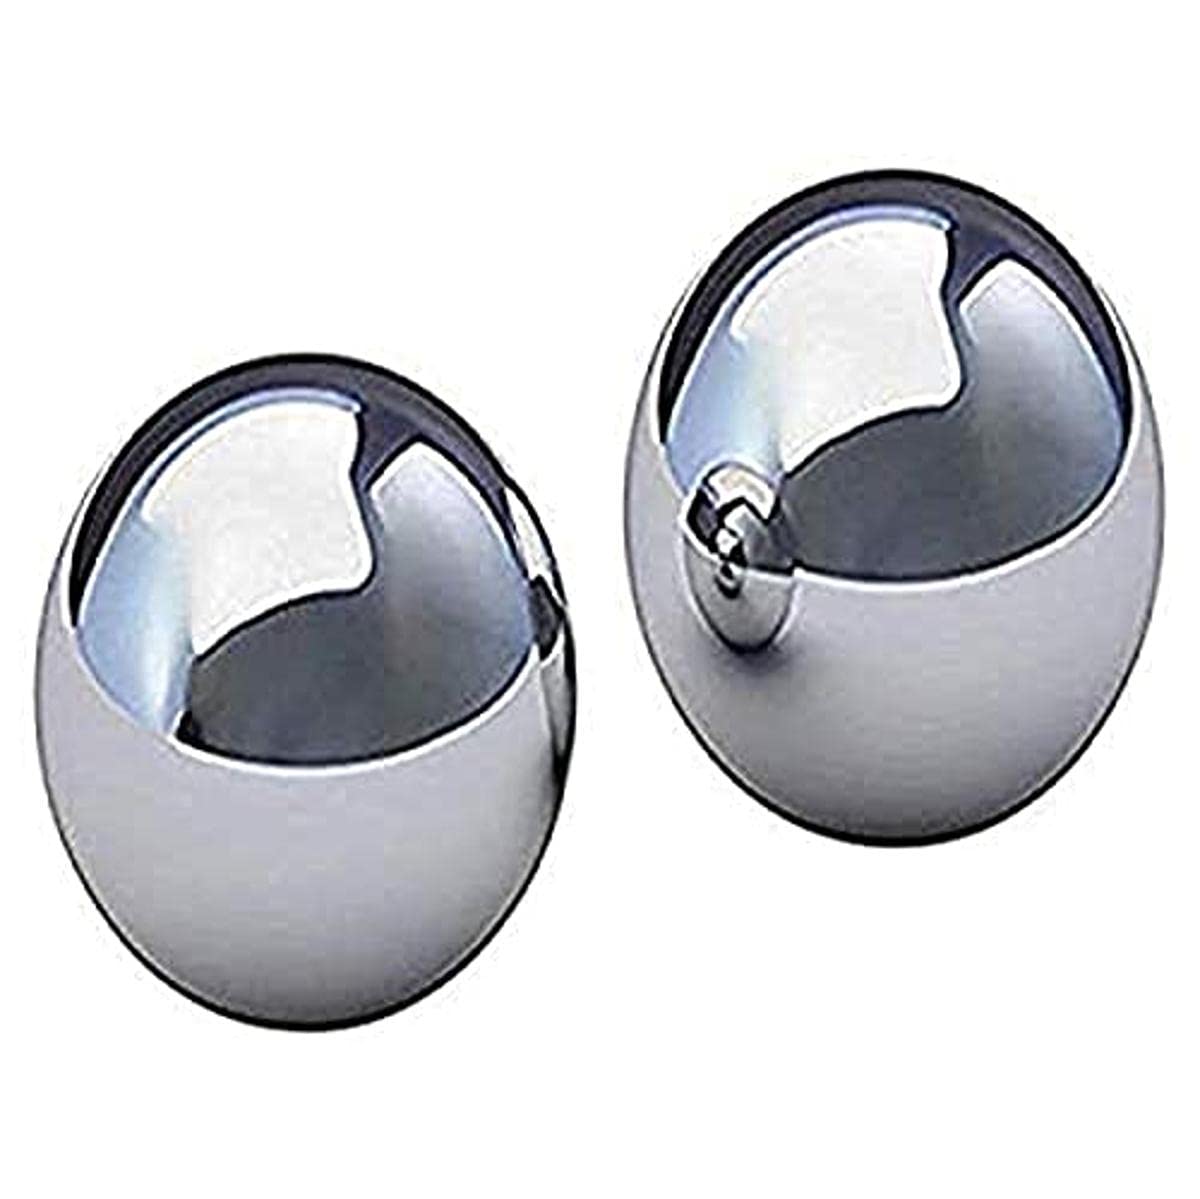 Solid Stainless Steel Kegel Balls